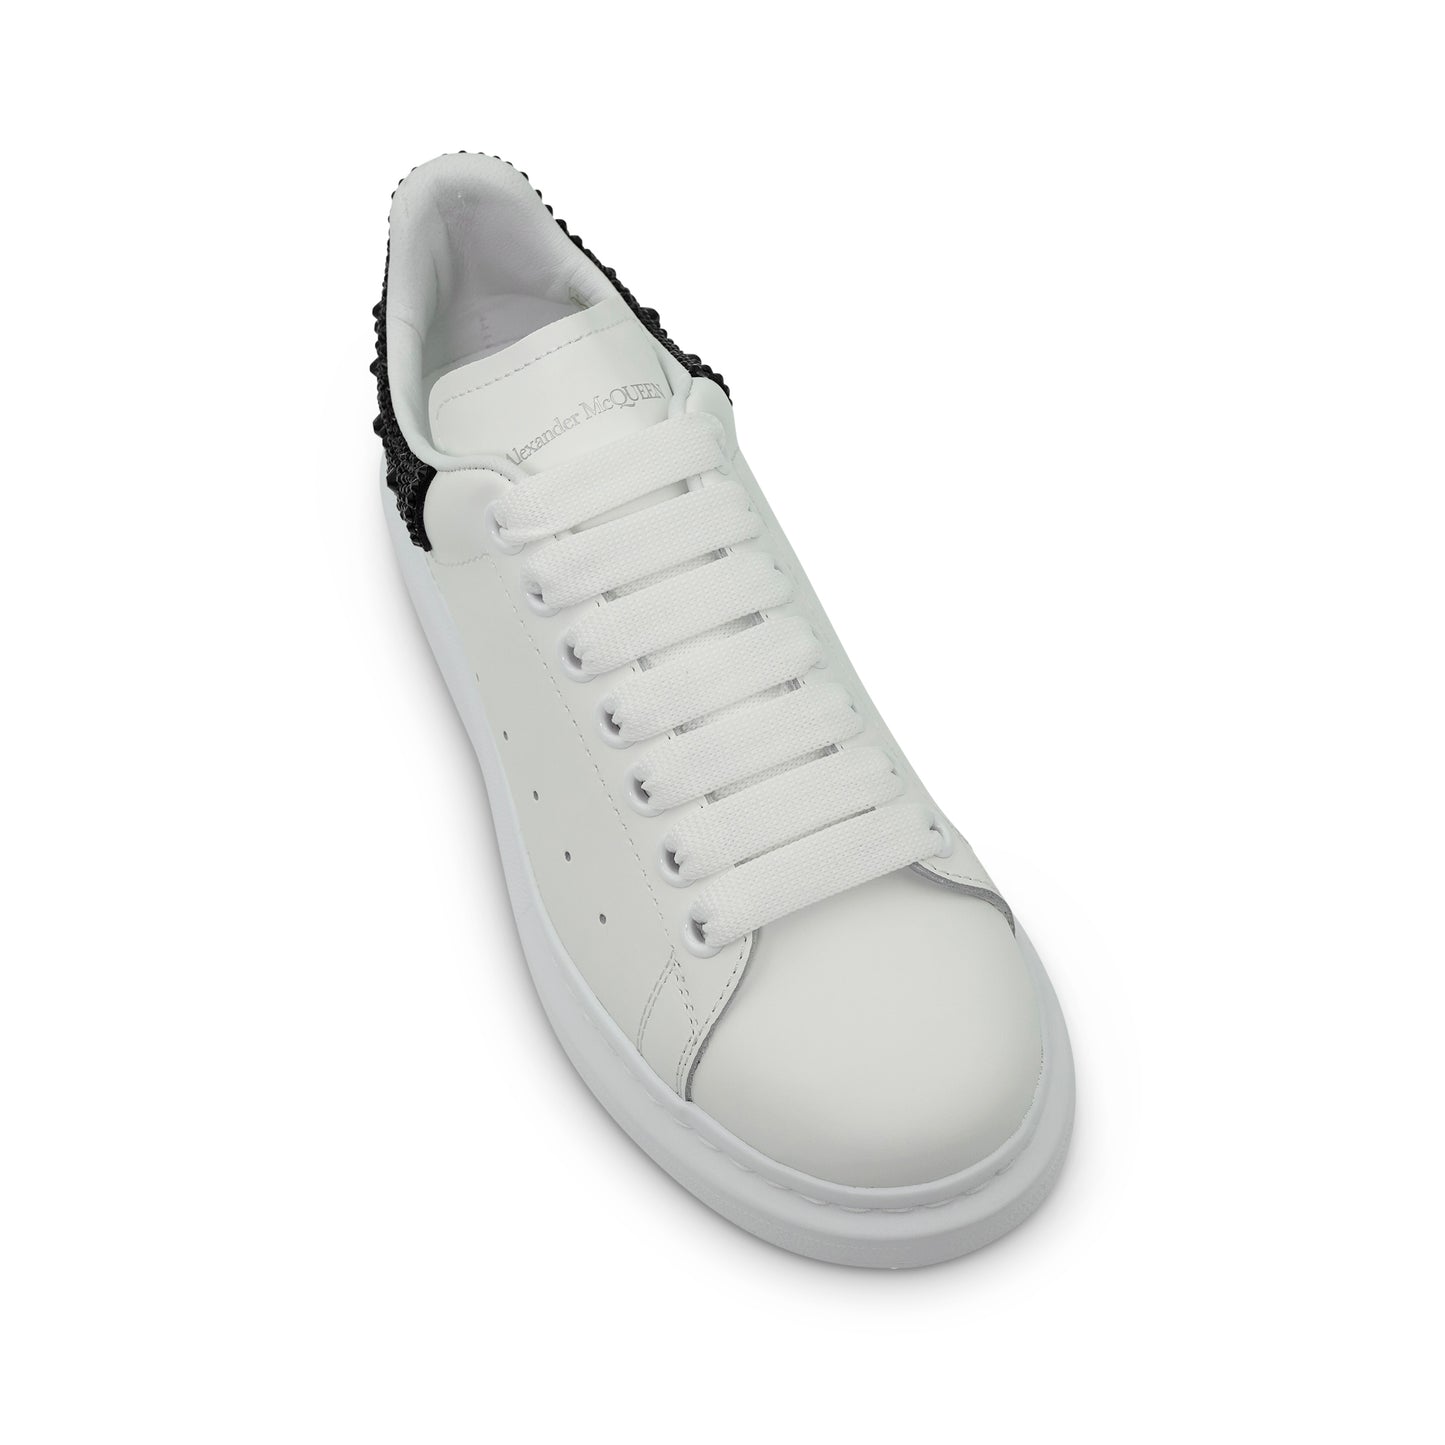 Larry Oversized Heel Sneaker in White/Black Crystal